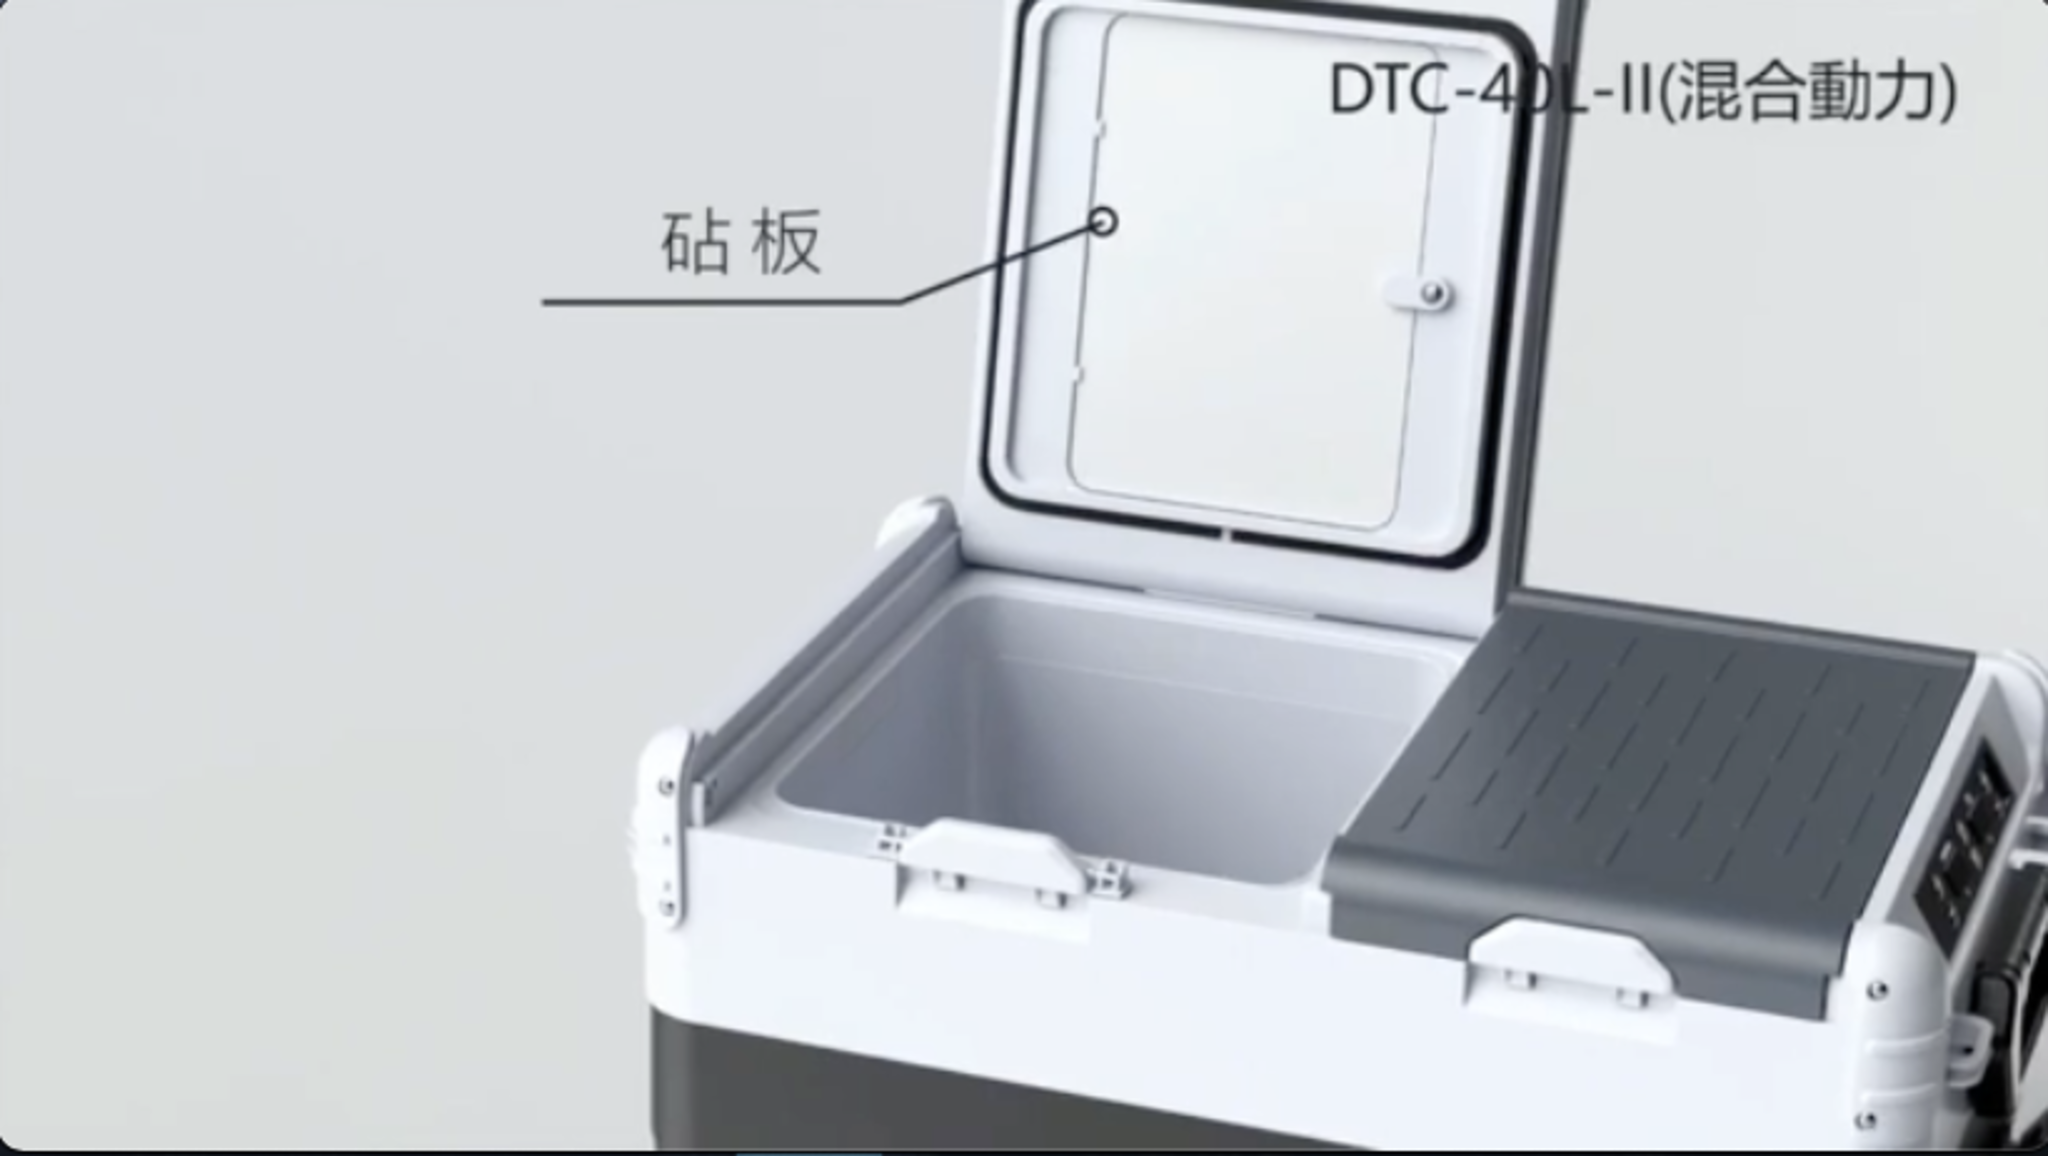 【ARCTIC ICE 北極冰】車載行動冰箱 雙門雙槽 獨立溫控 混合動力 DTC-40-II